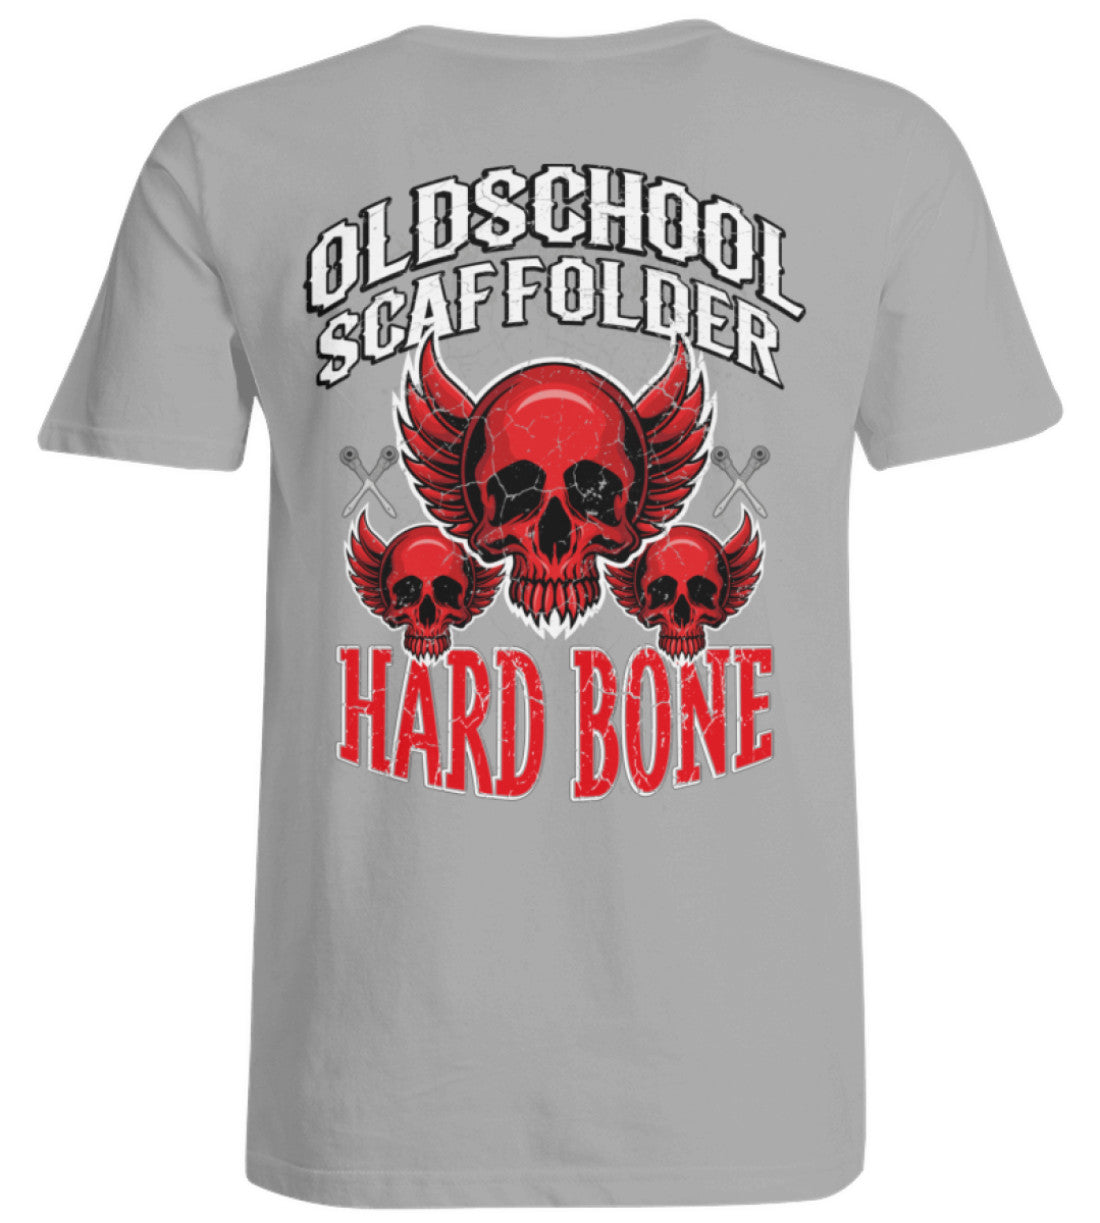 Hard Bone €29.95 Gerüstbauer - Shop >>